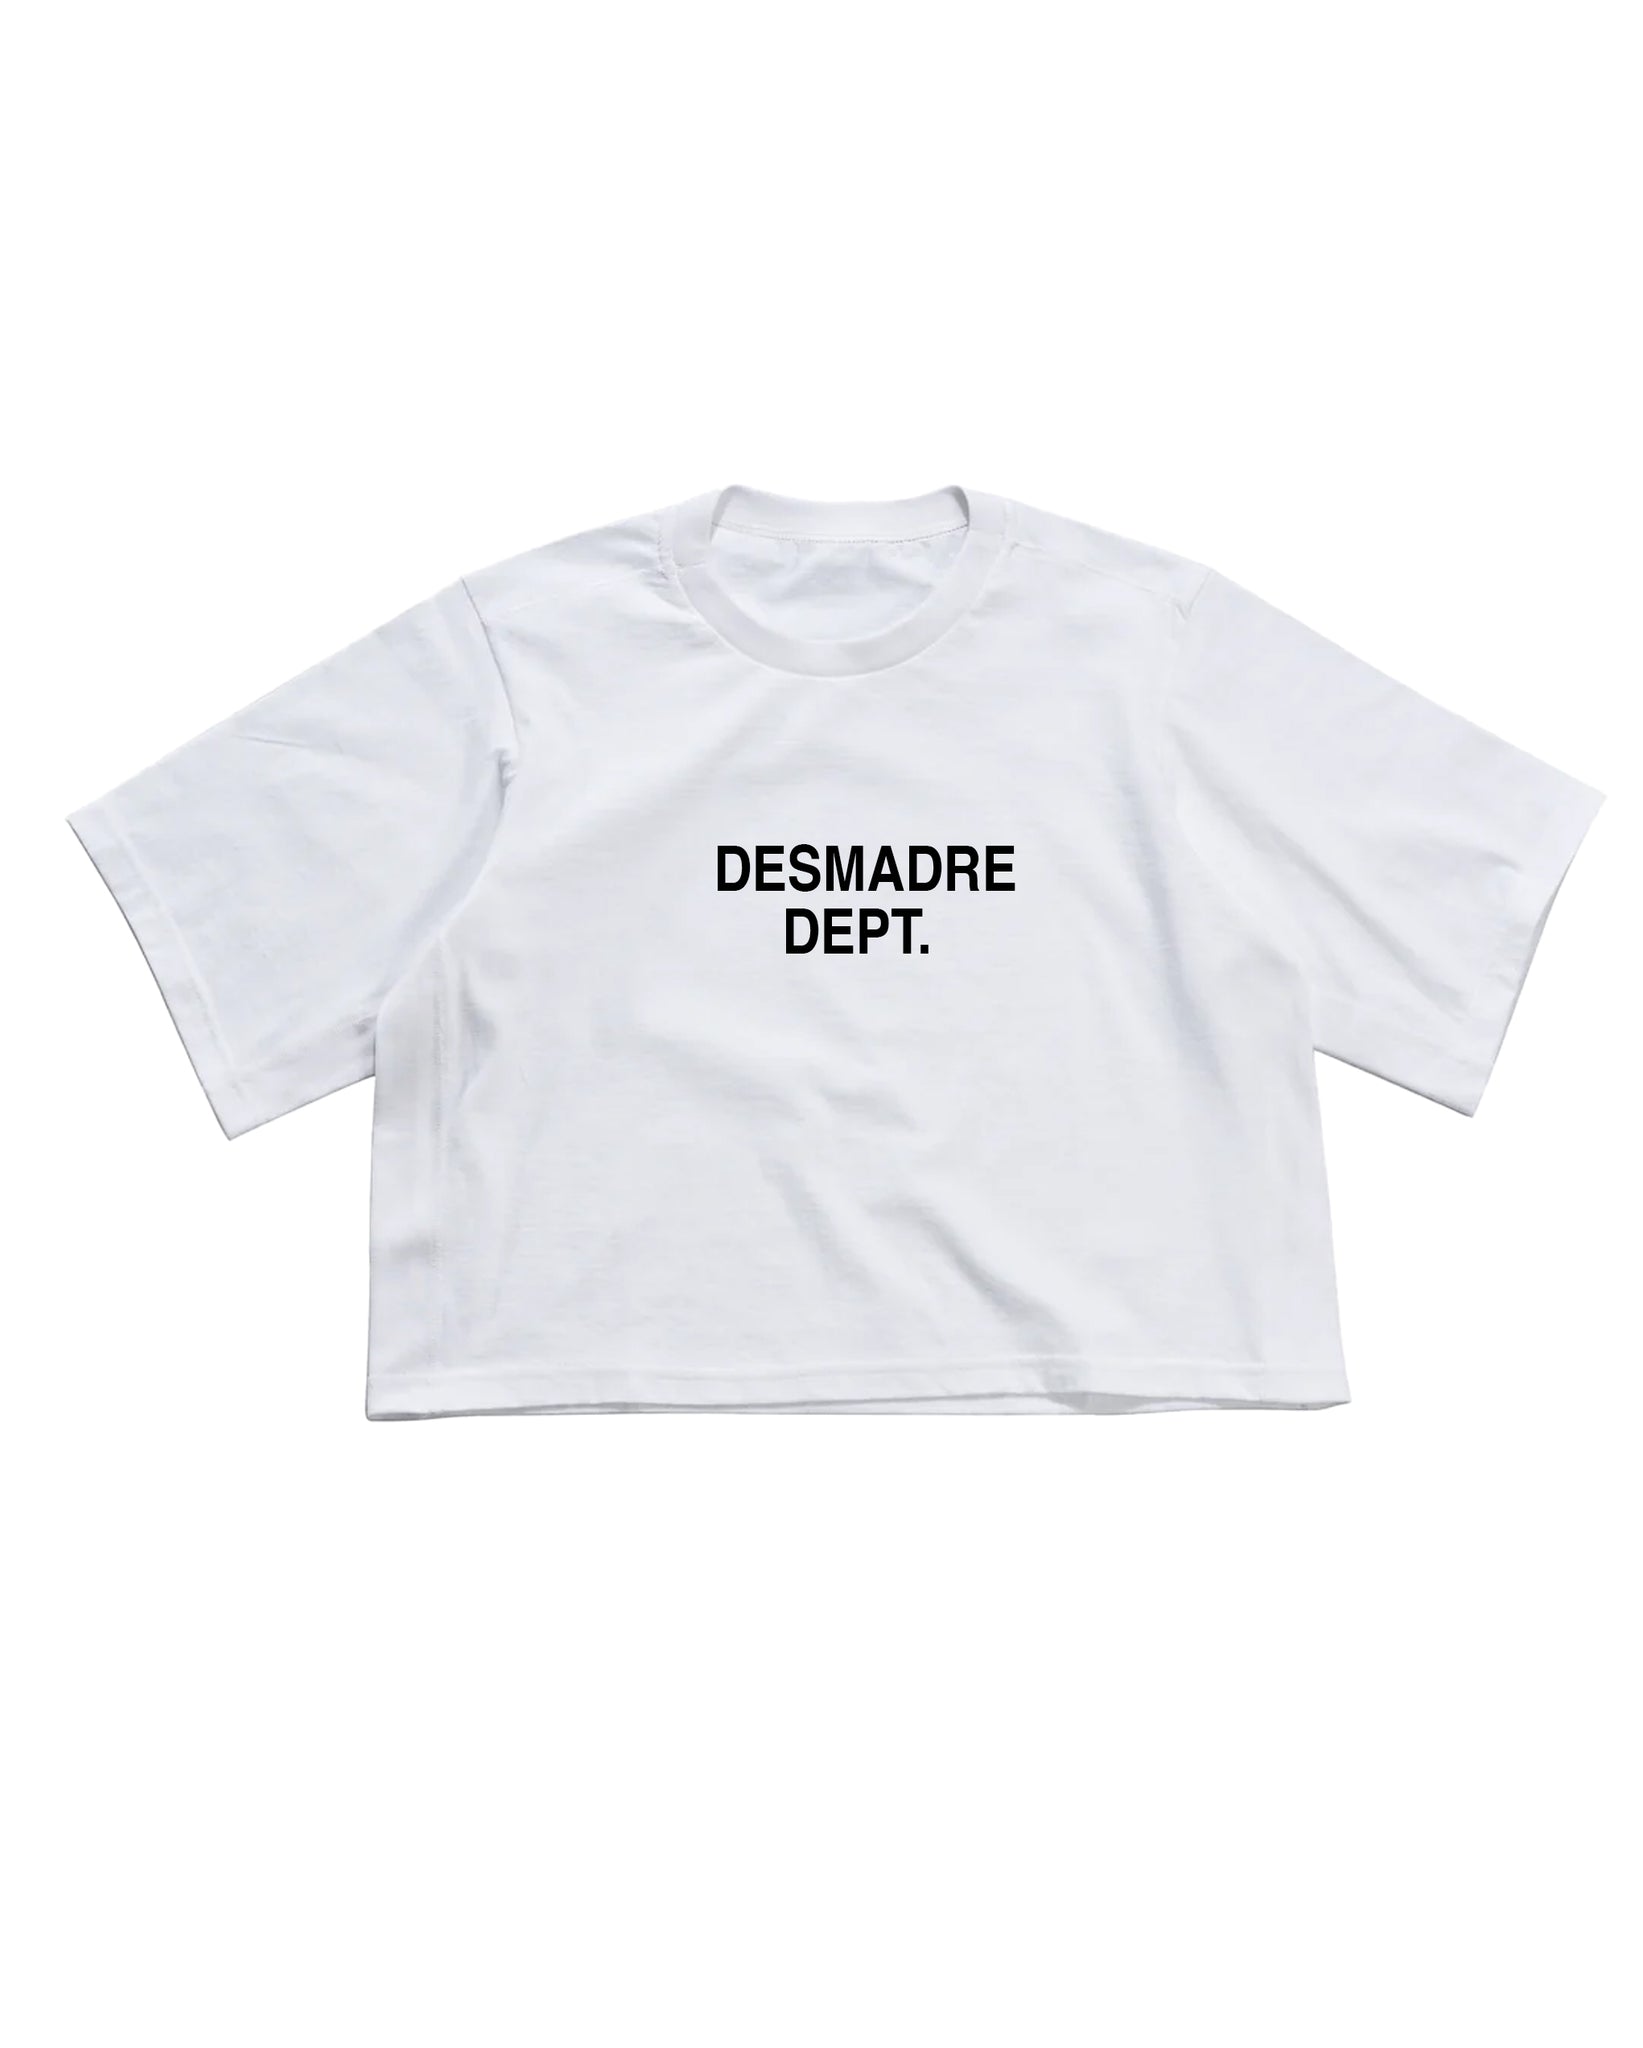 DESMADRE DEPT. CROP TOP T-SHIRT ™